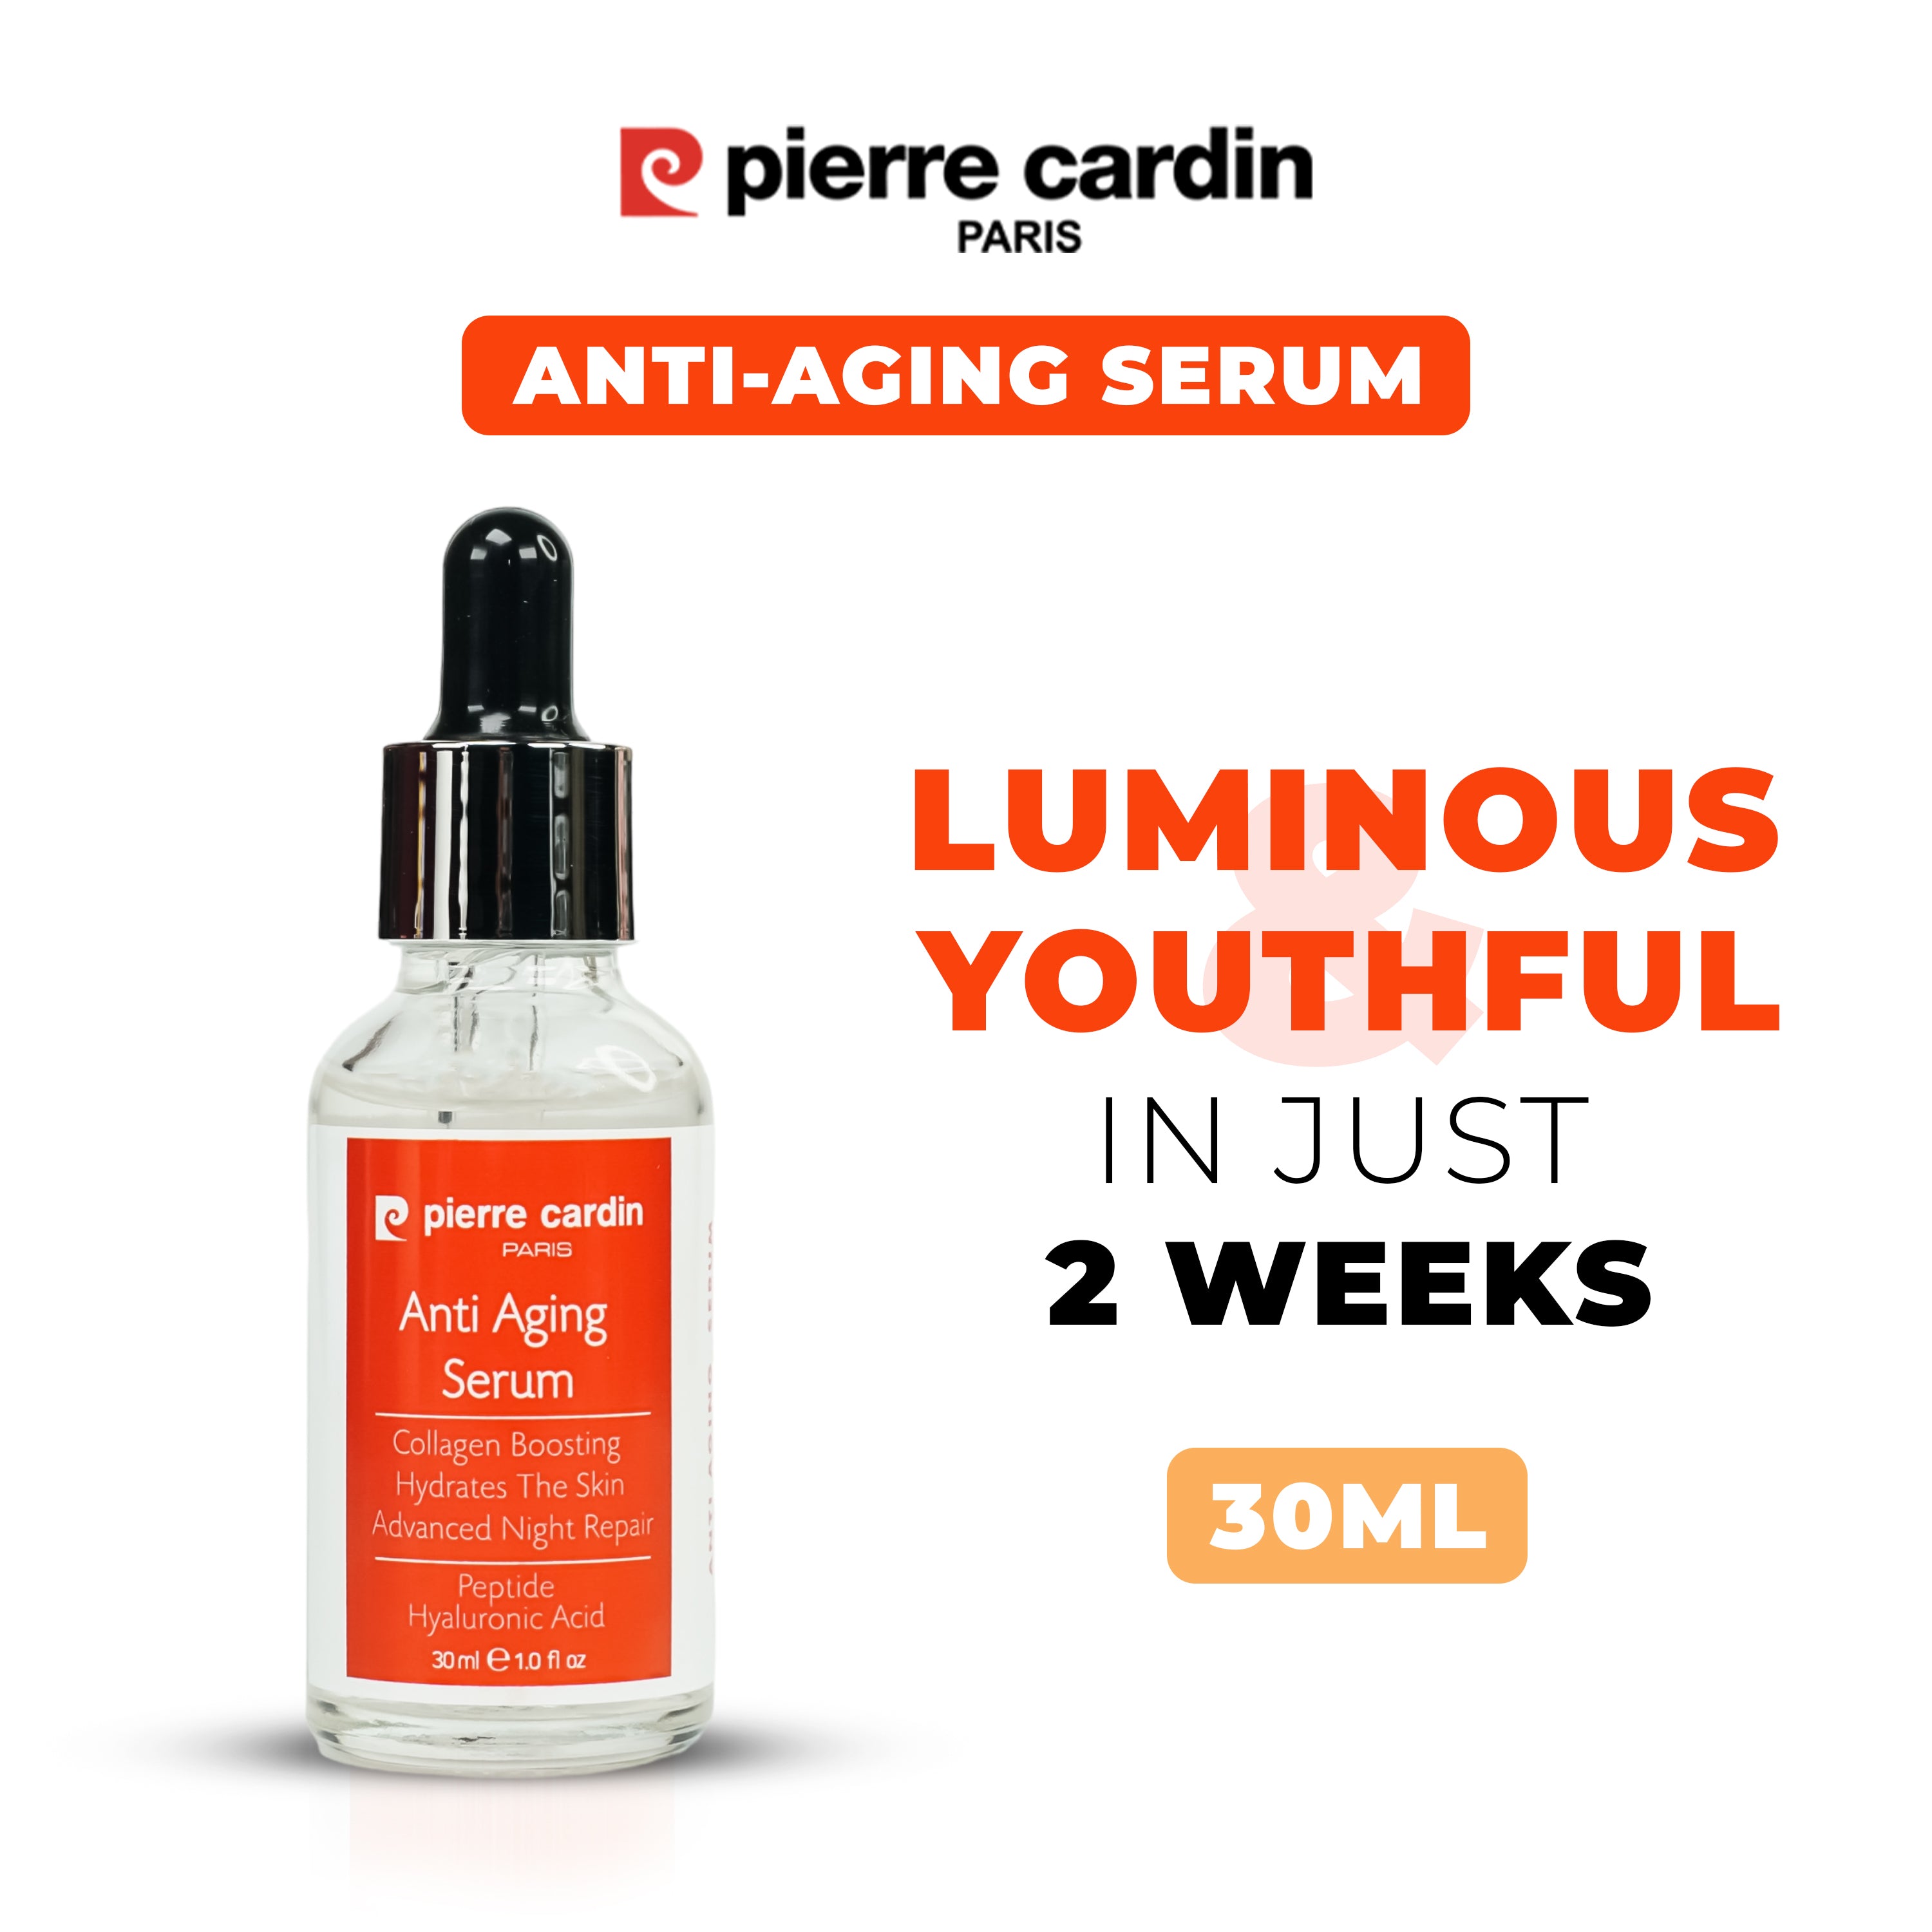 Pierre Cardin Paris Anti-Aging Serum 30ml